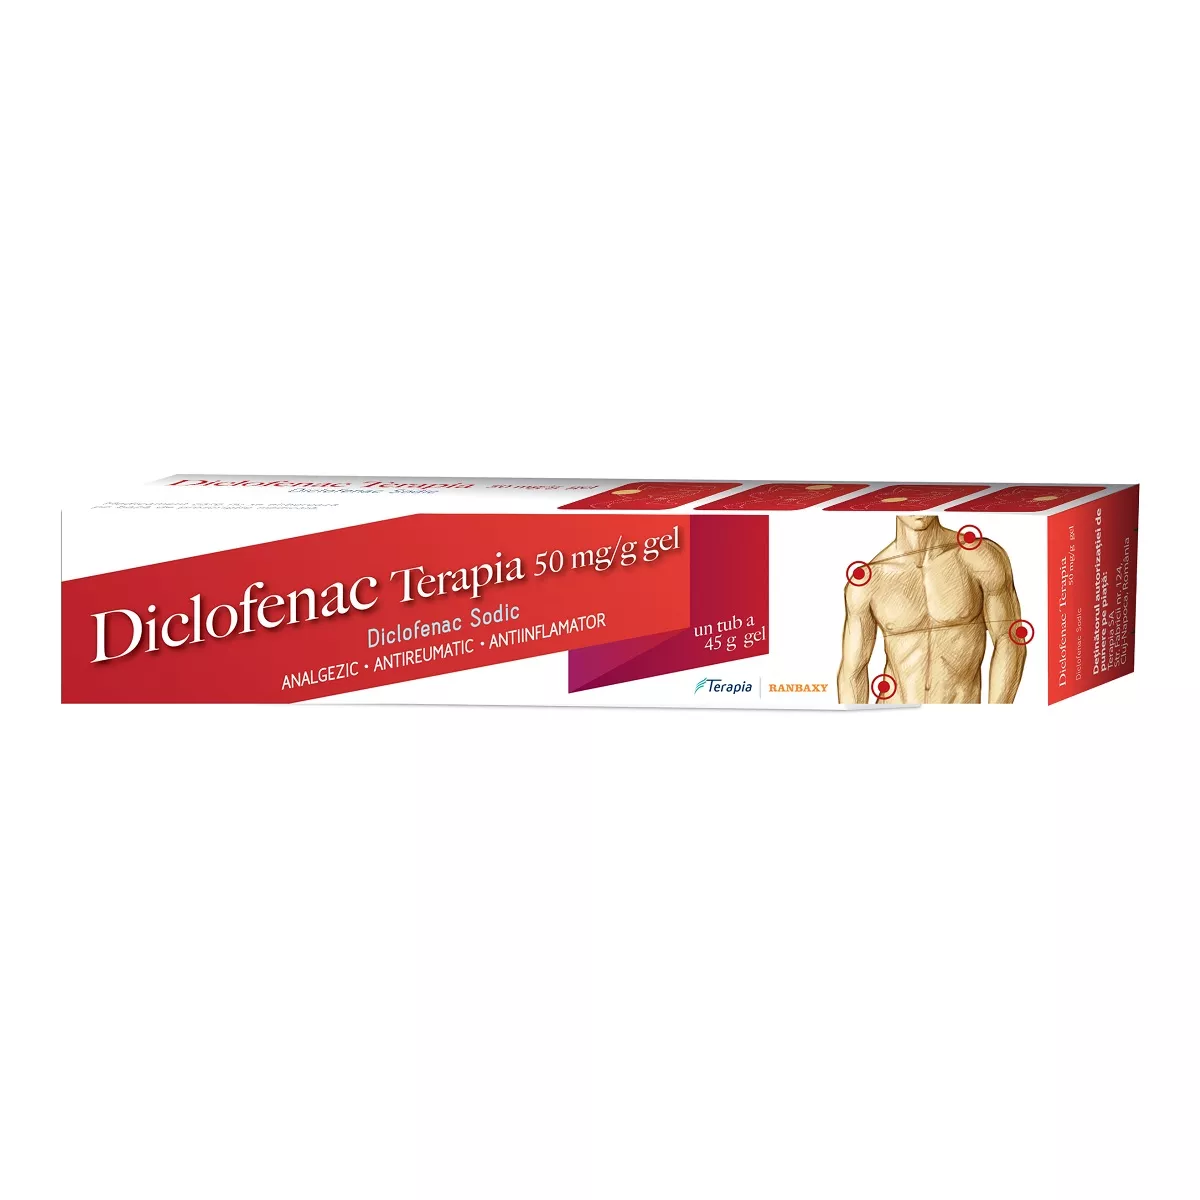 Diclofenac Terapia 50 mg/g gel * 45 grame, [],clinicafarm.ro